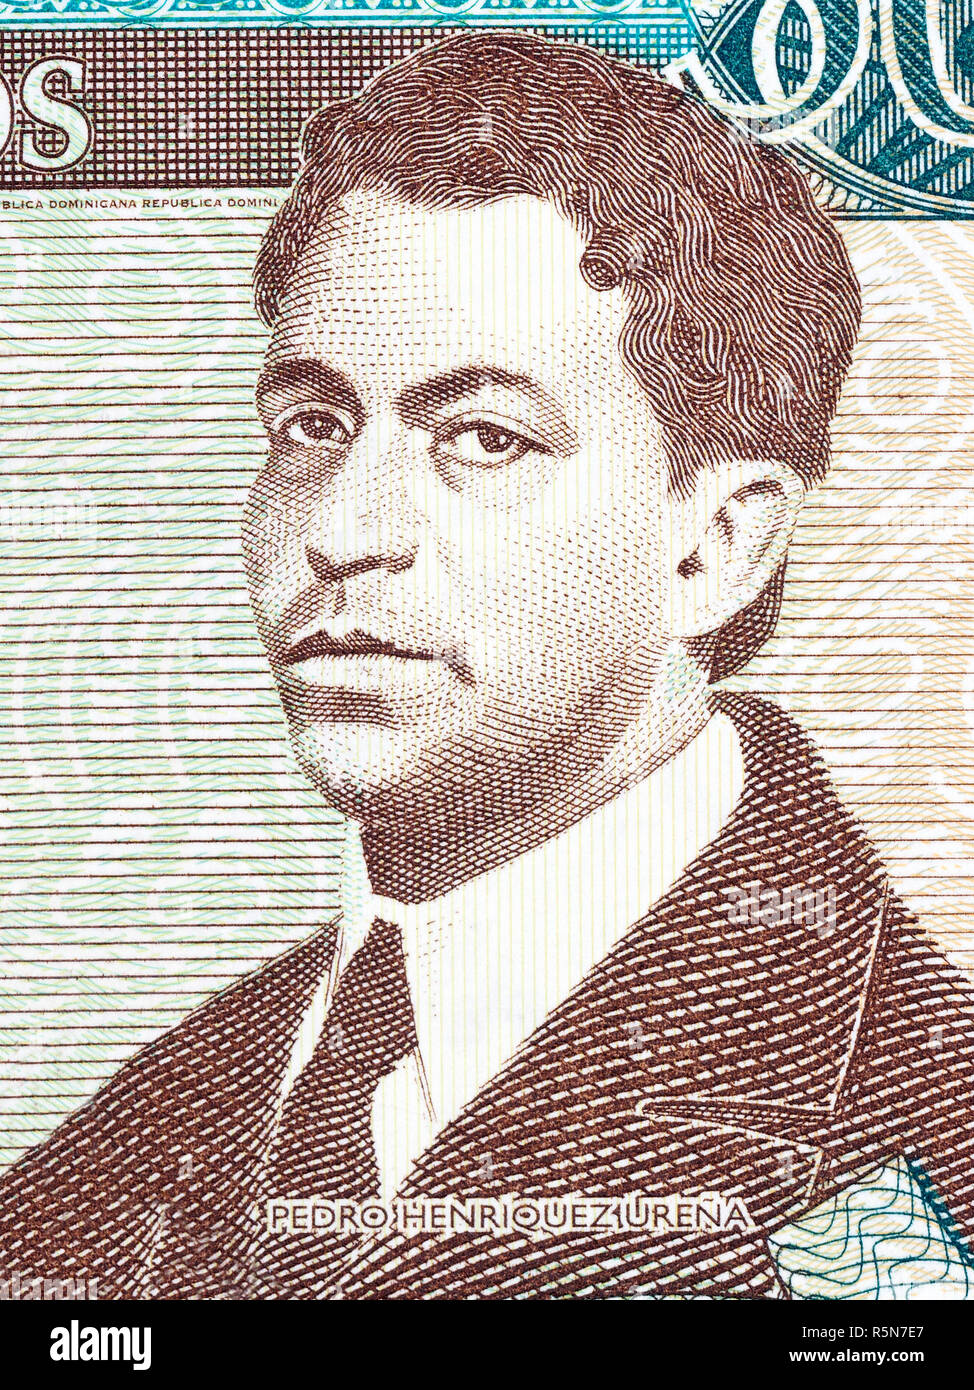 Pedro Henriquez Urena portrait Stock Photo